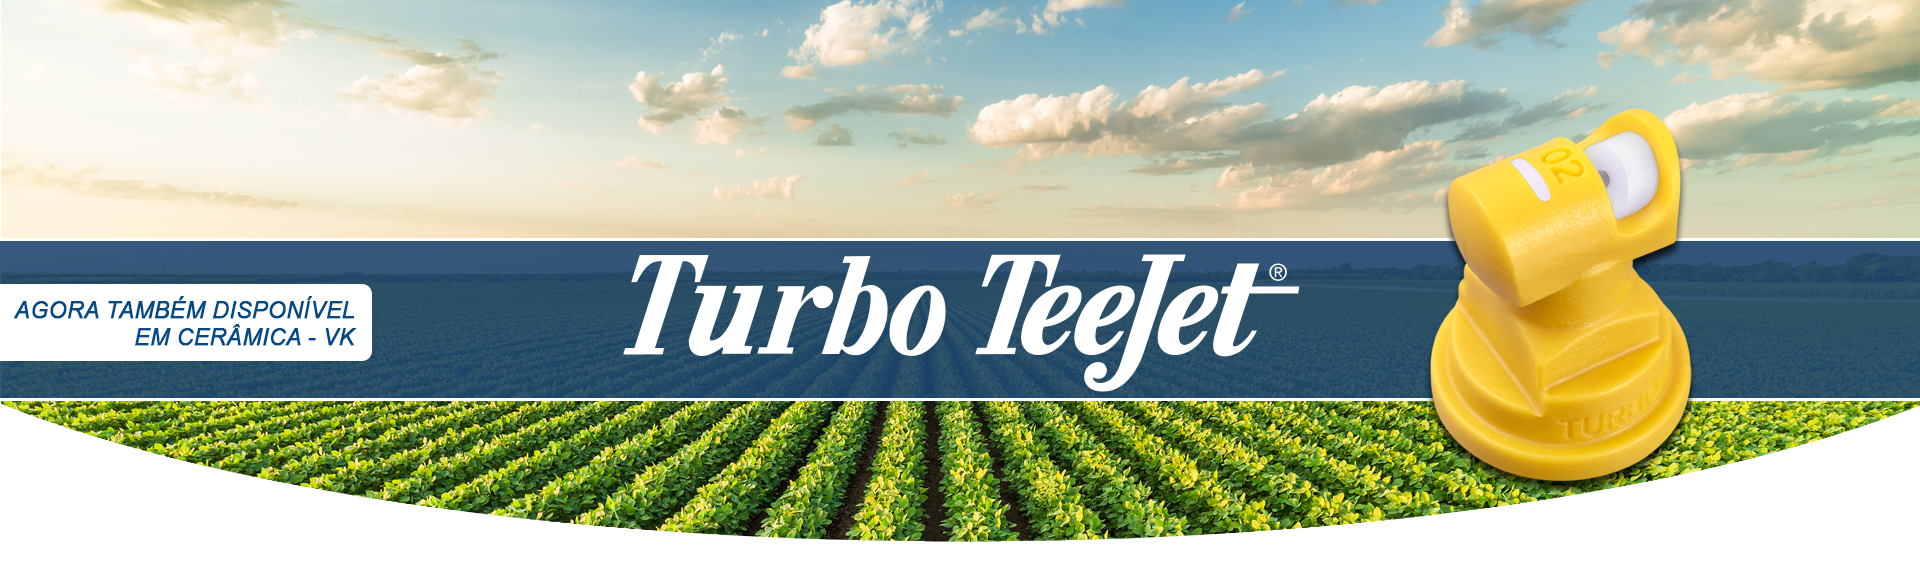 Turbo TeeJet® - Agora Também Disponível em Cerâmica - VK